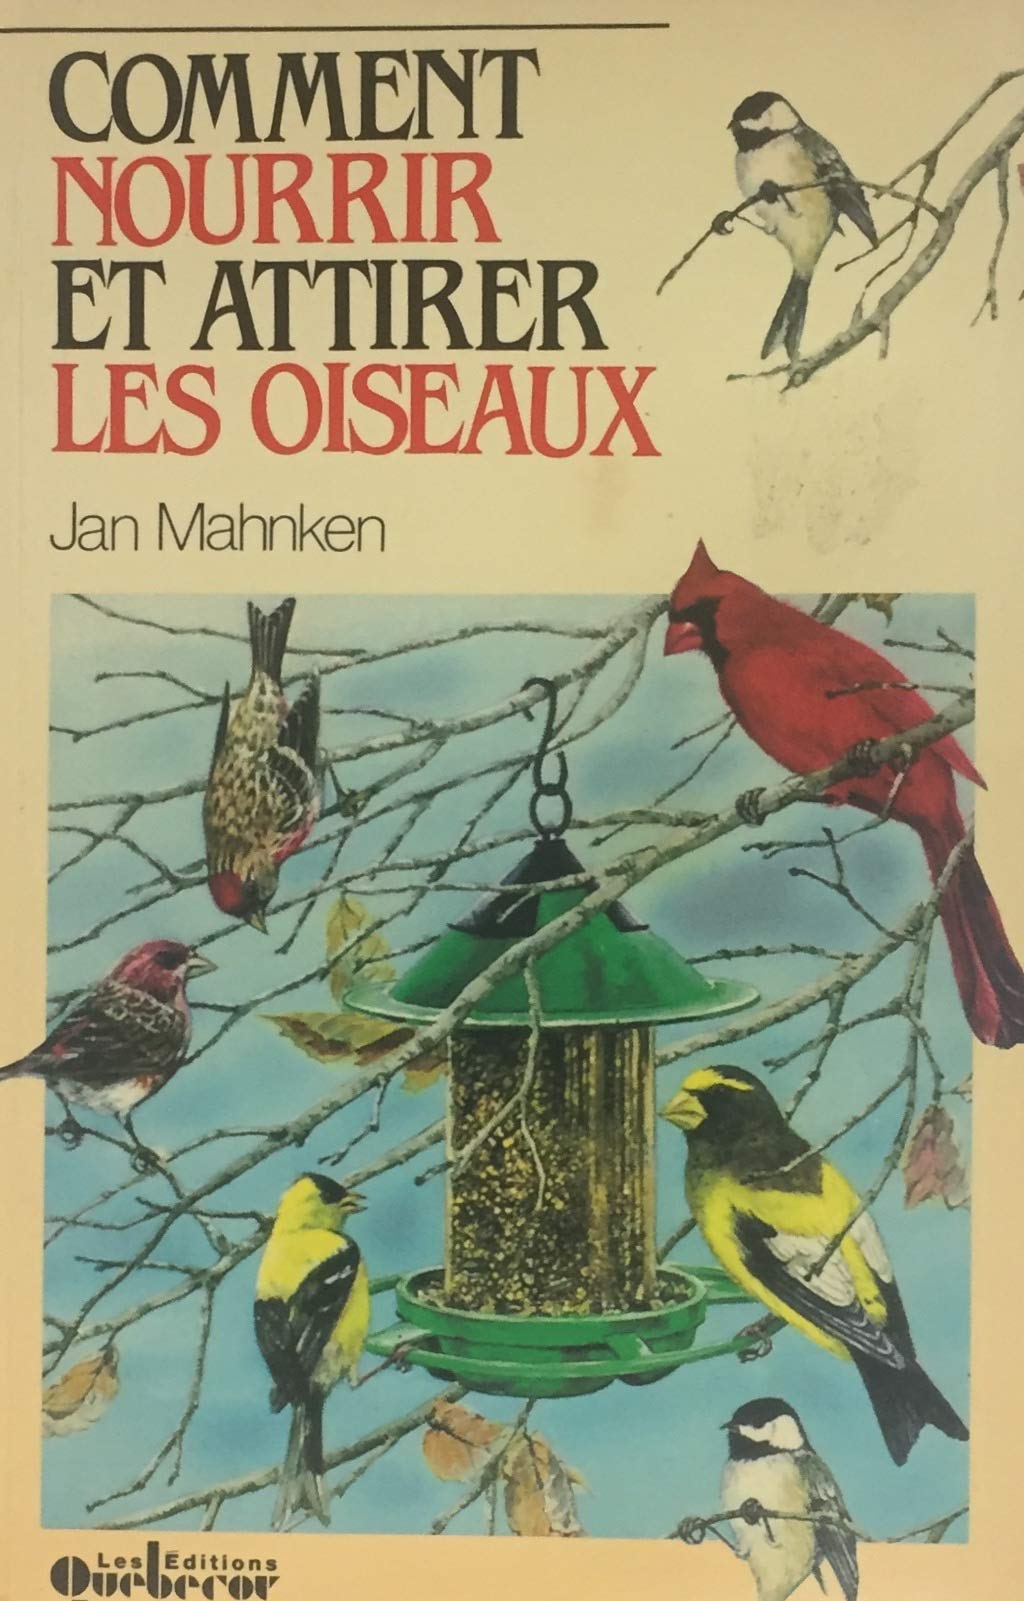 Livre ISBN 2890894835 Comment nourrir et attirer les oiseaux (Jan Mahnken)